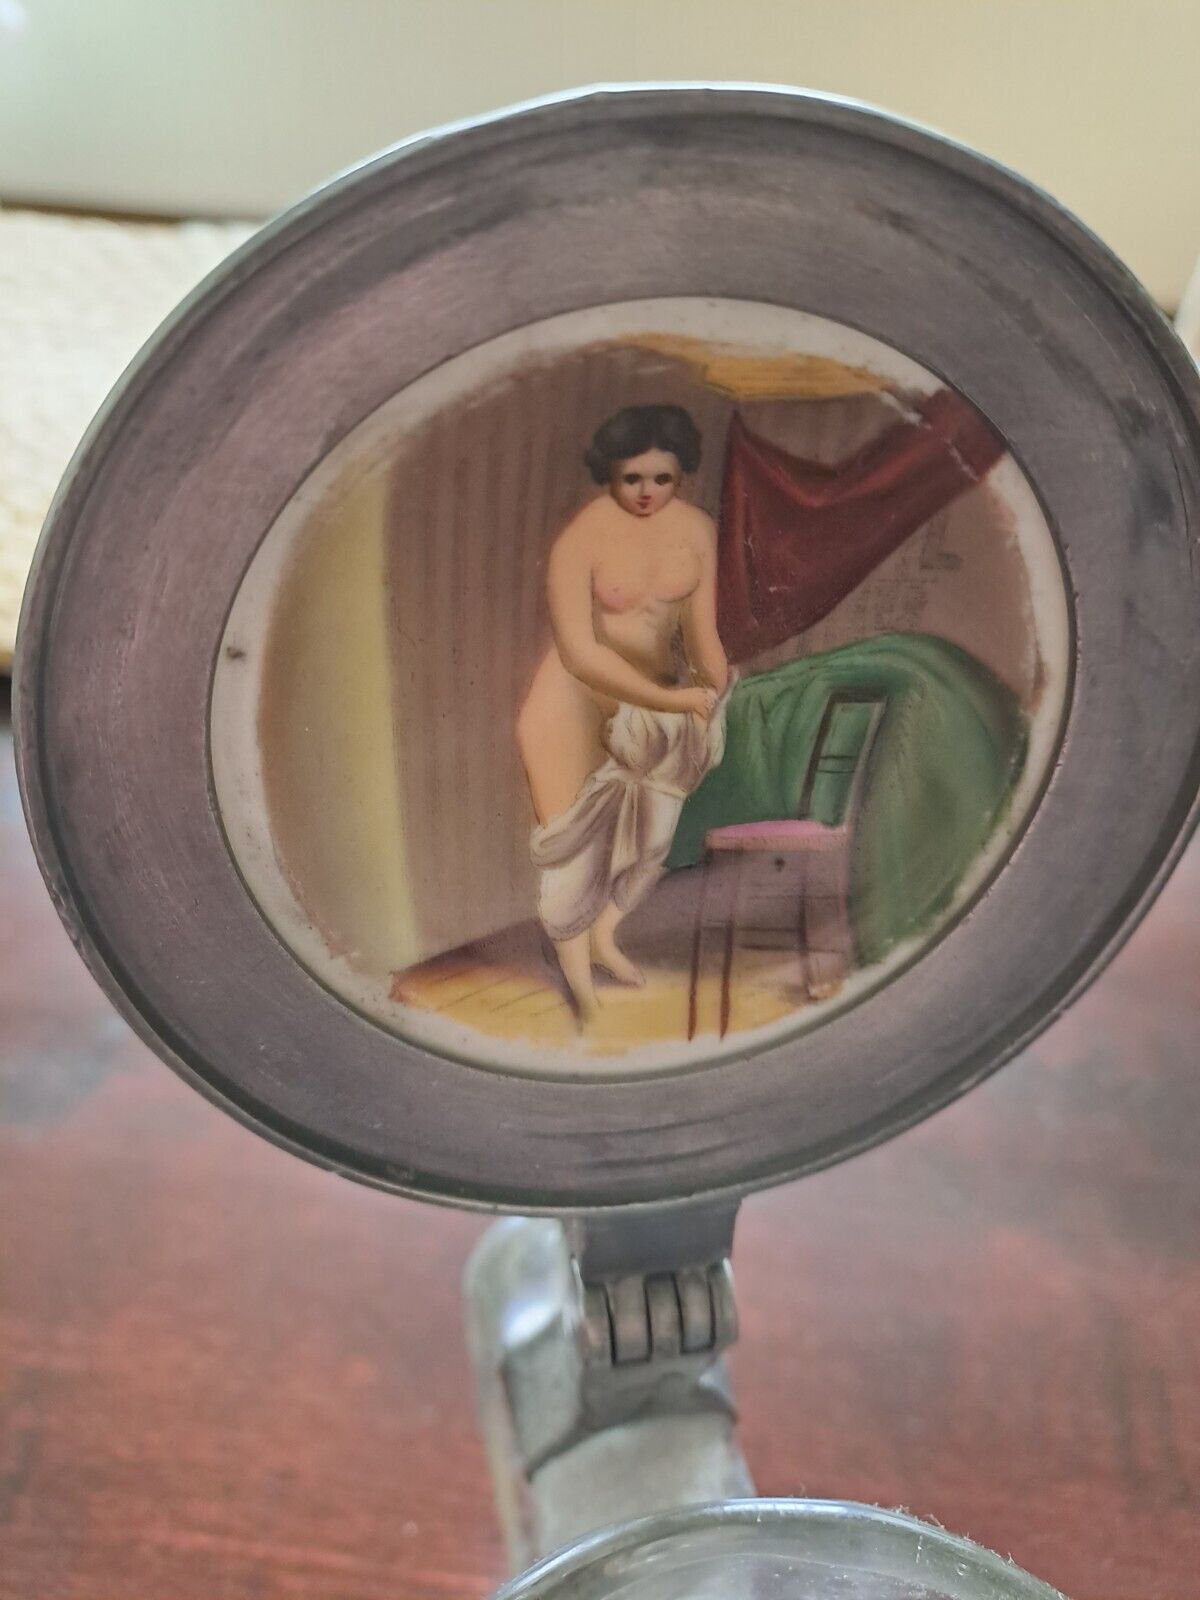 Bierkrug Glaskrug mit Porzellandeckel Erotik um 1900